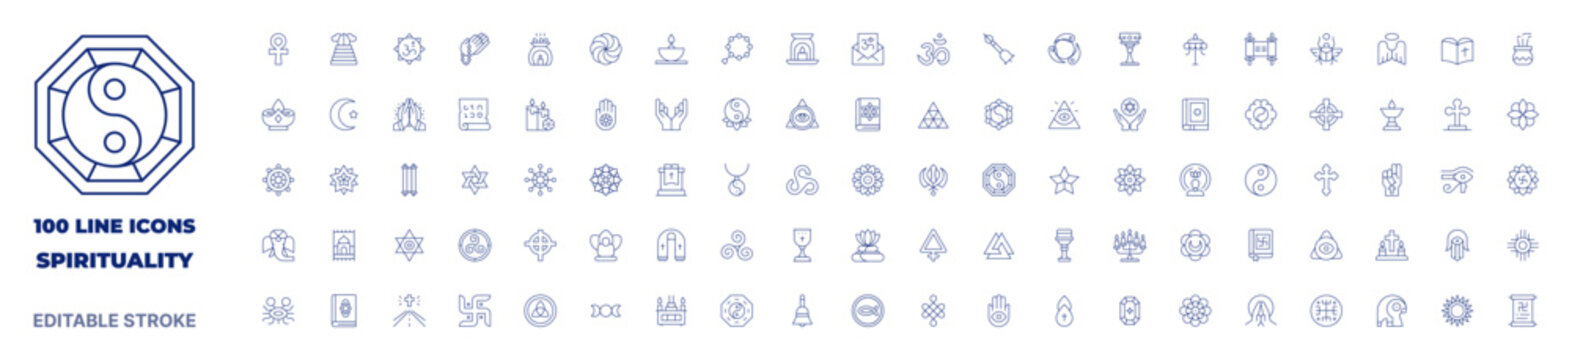 100 icons Spirituality collection. Thin line icon. Editable stroke. Spirituality icons for web and mobile app.